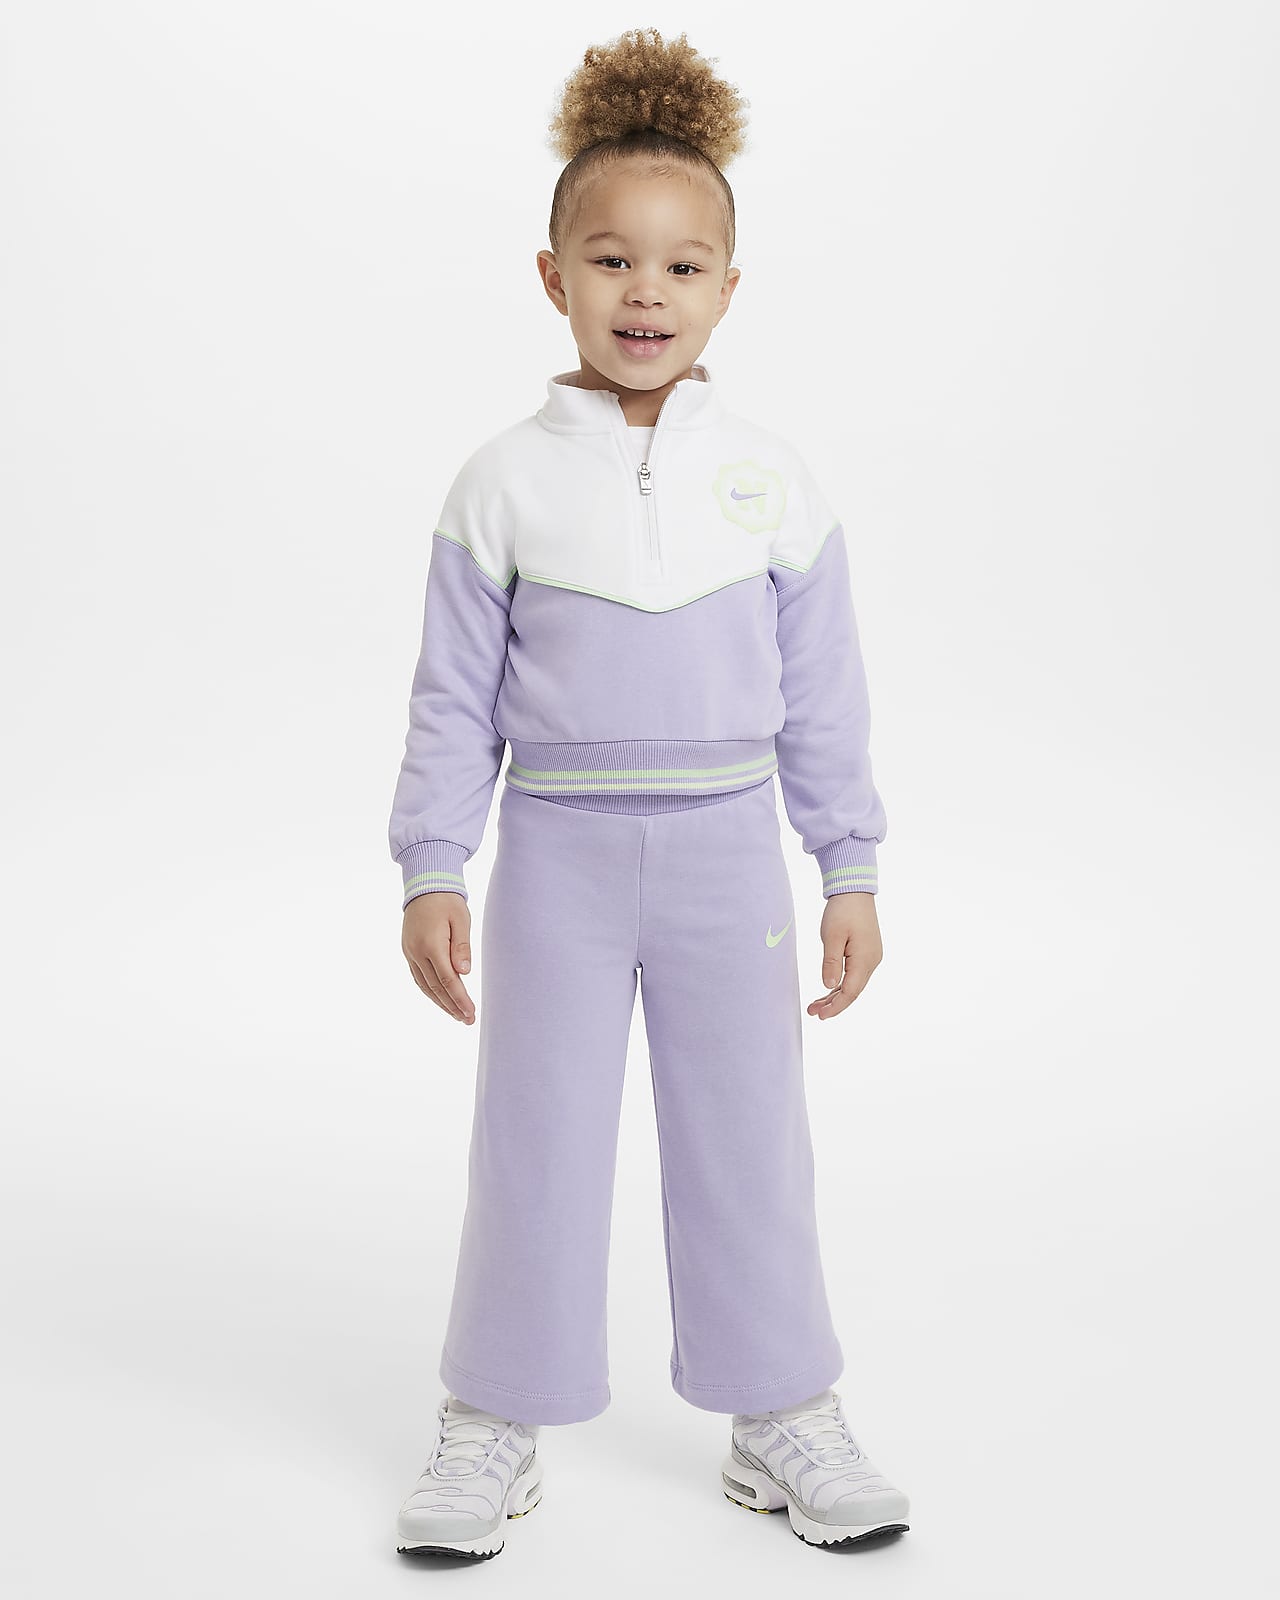 Nike Prep in Your Step Toddler Half-Zip Set